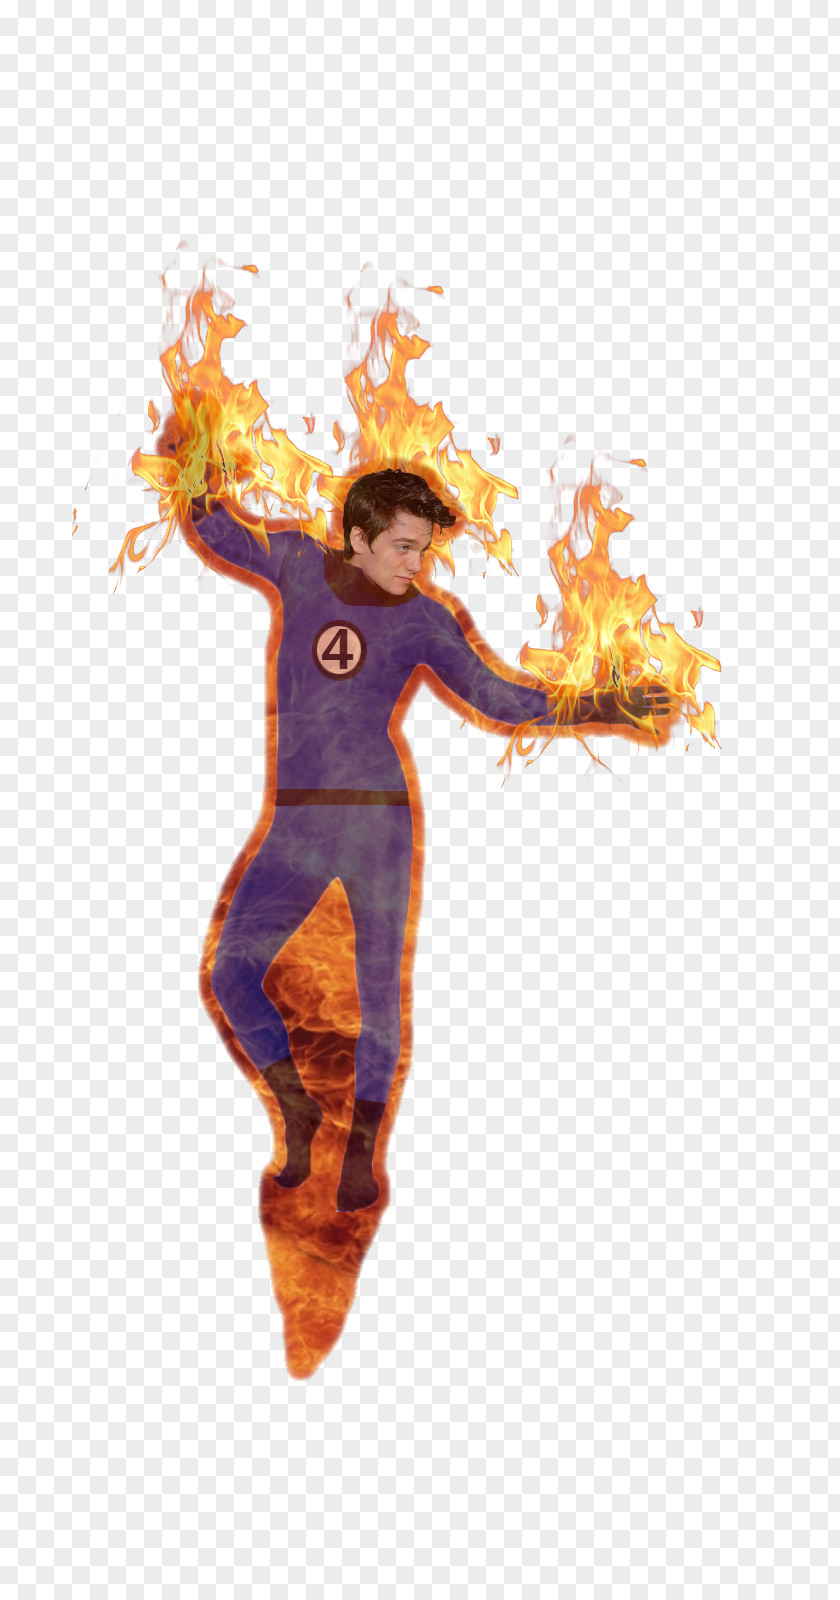 Human Torch Johnny Blaze Marvel Cinematic Universe Comics Spider-Man PNG